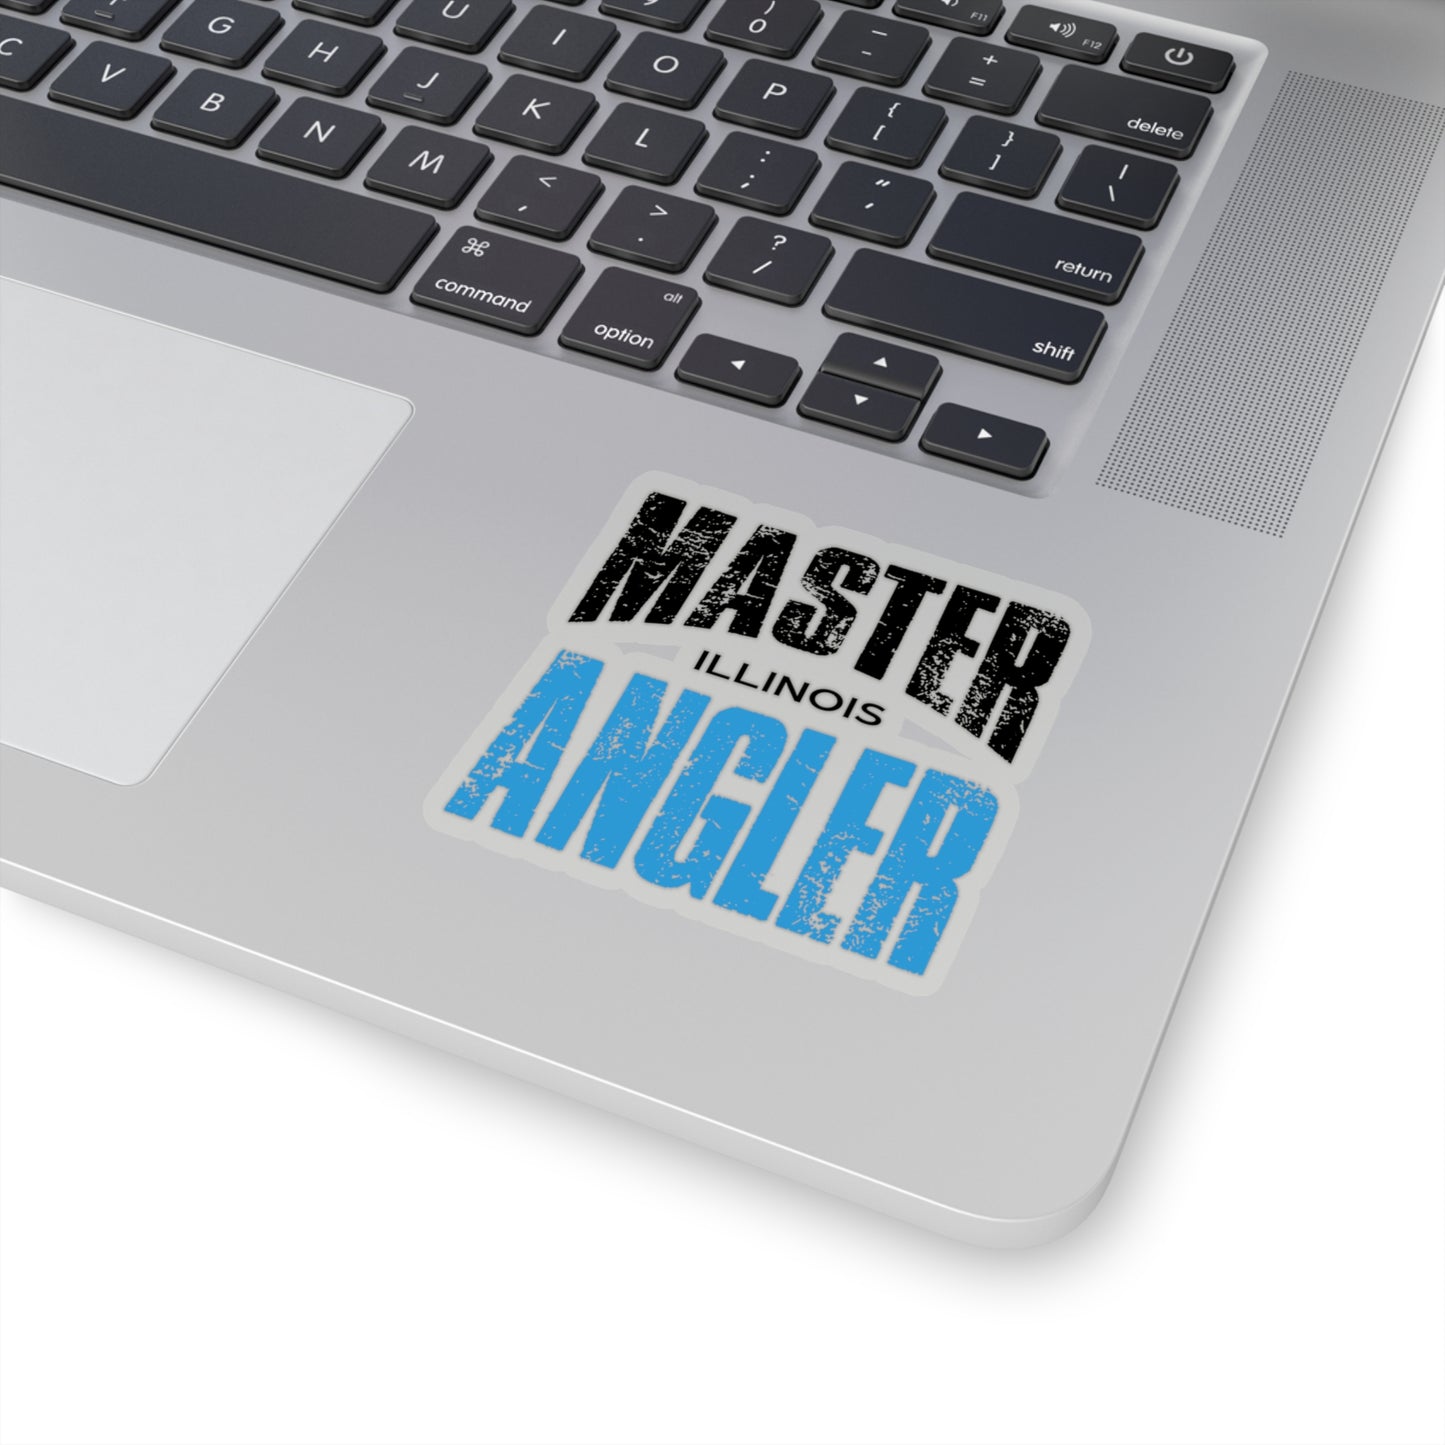 Illinois Master Angler Sticker - BLUE